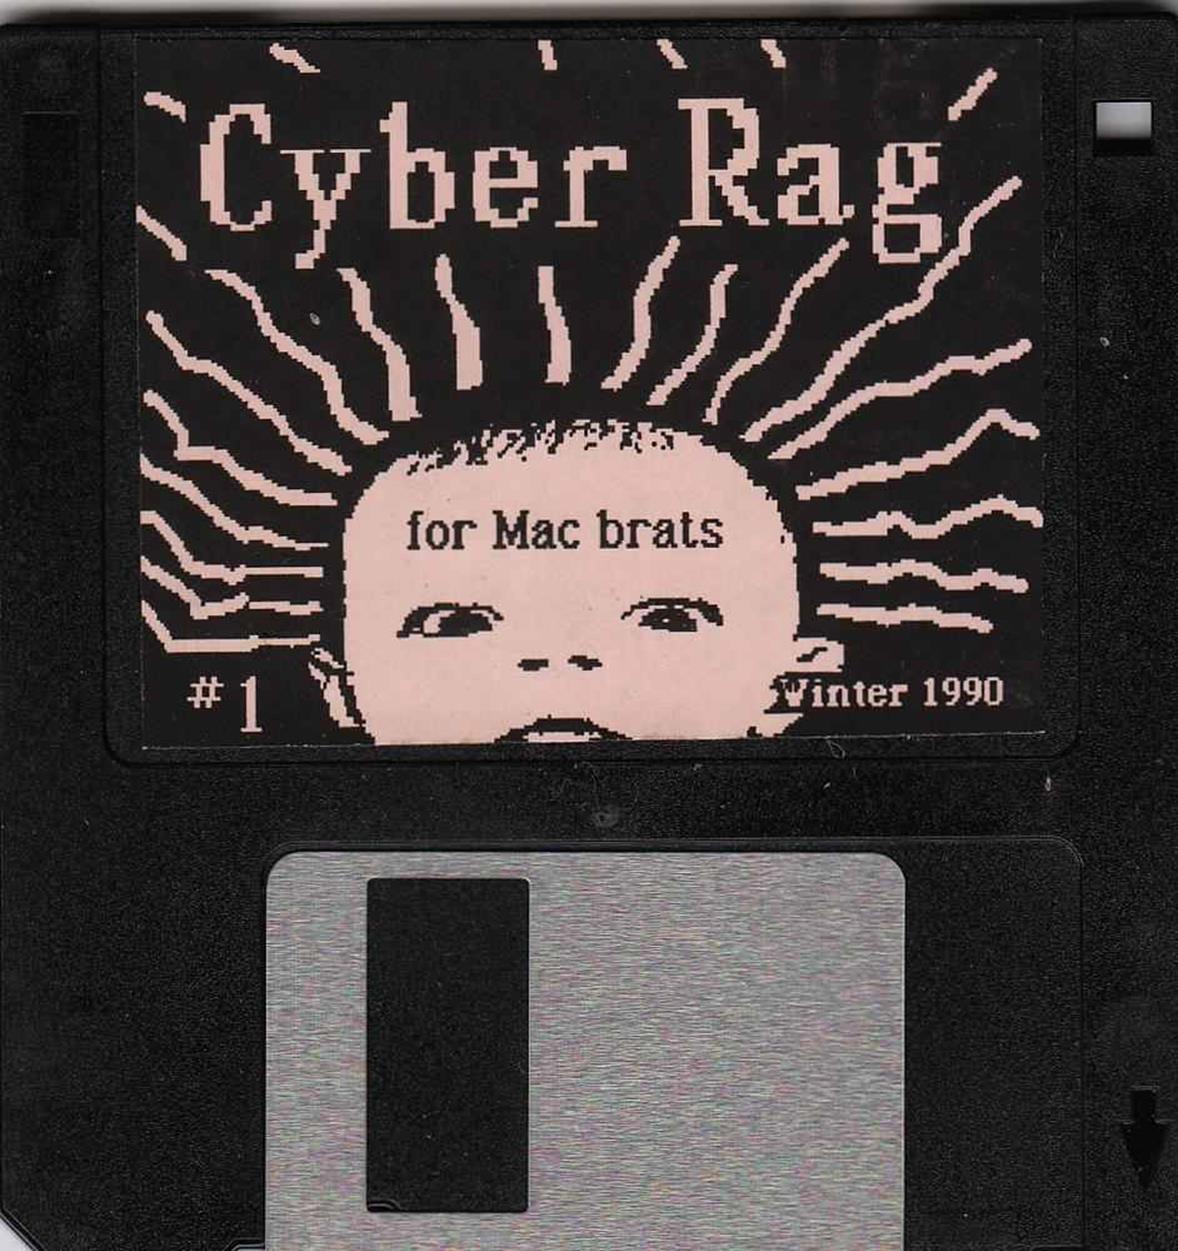 Cyber Rag (1990) electronic magazine on floppy disk